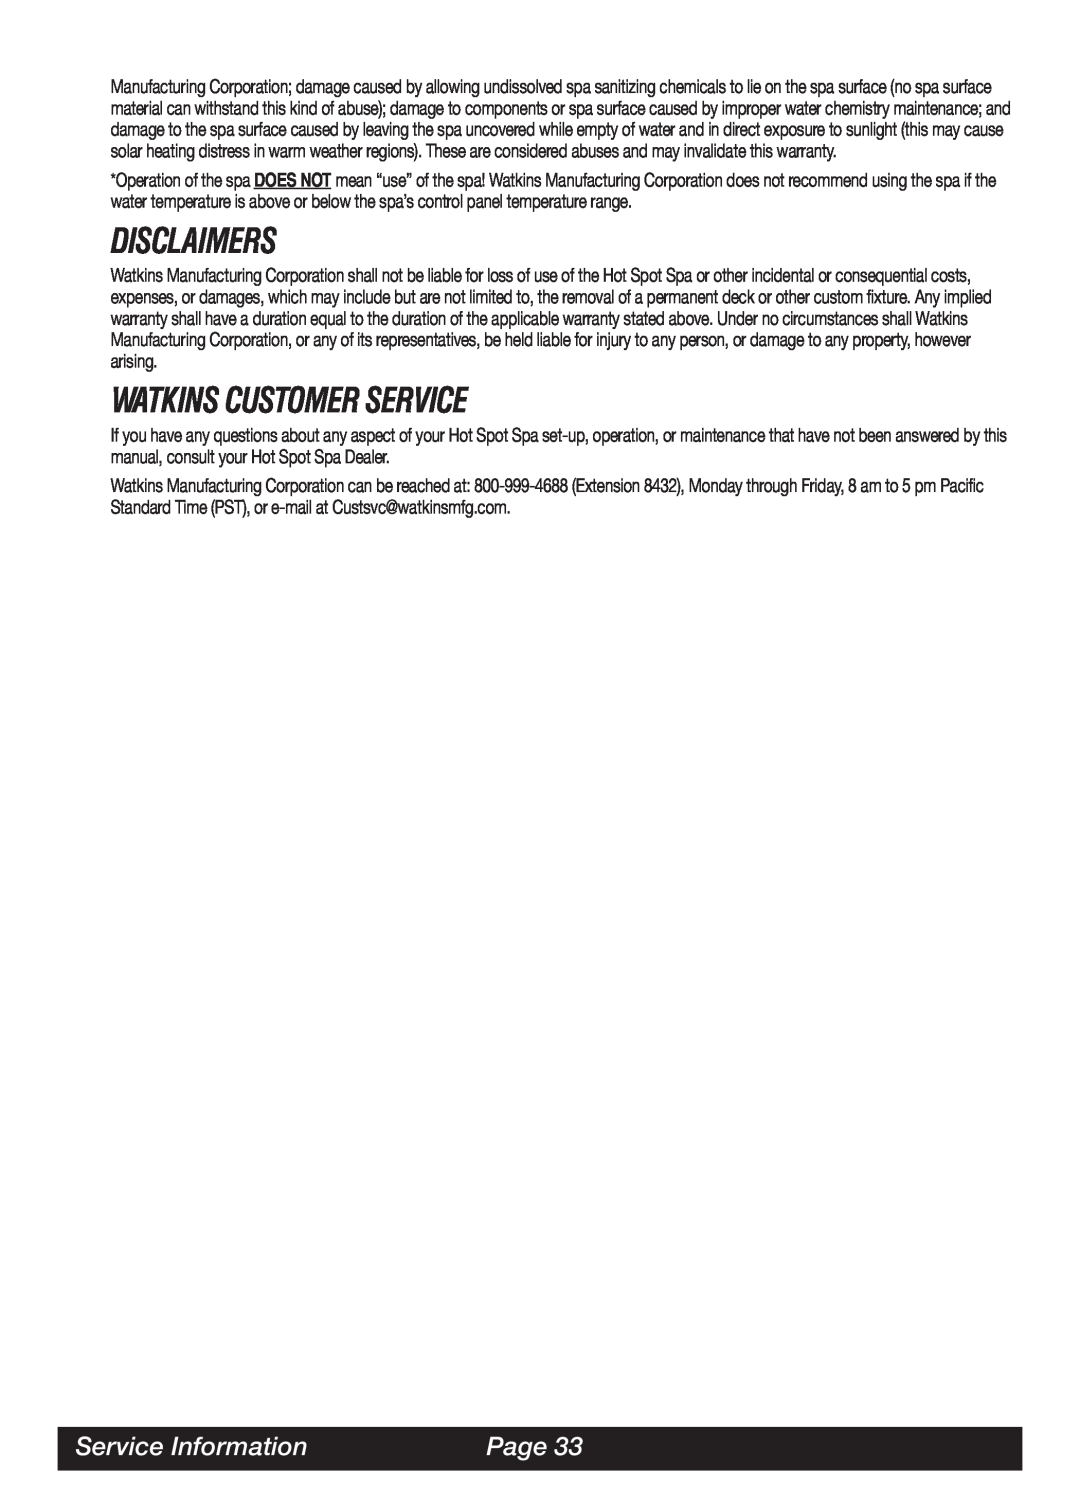 Watkins LAP, MAL, SOR, TRI manual Disclaimers, Watkins Customer Service, Service Information, Page 